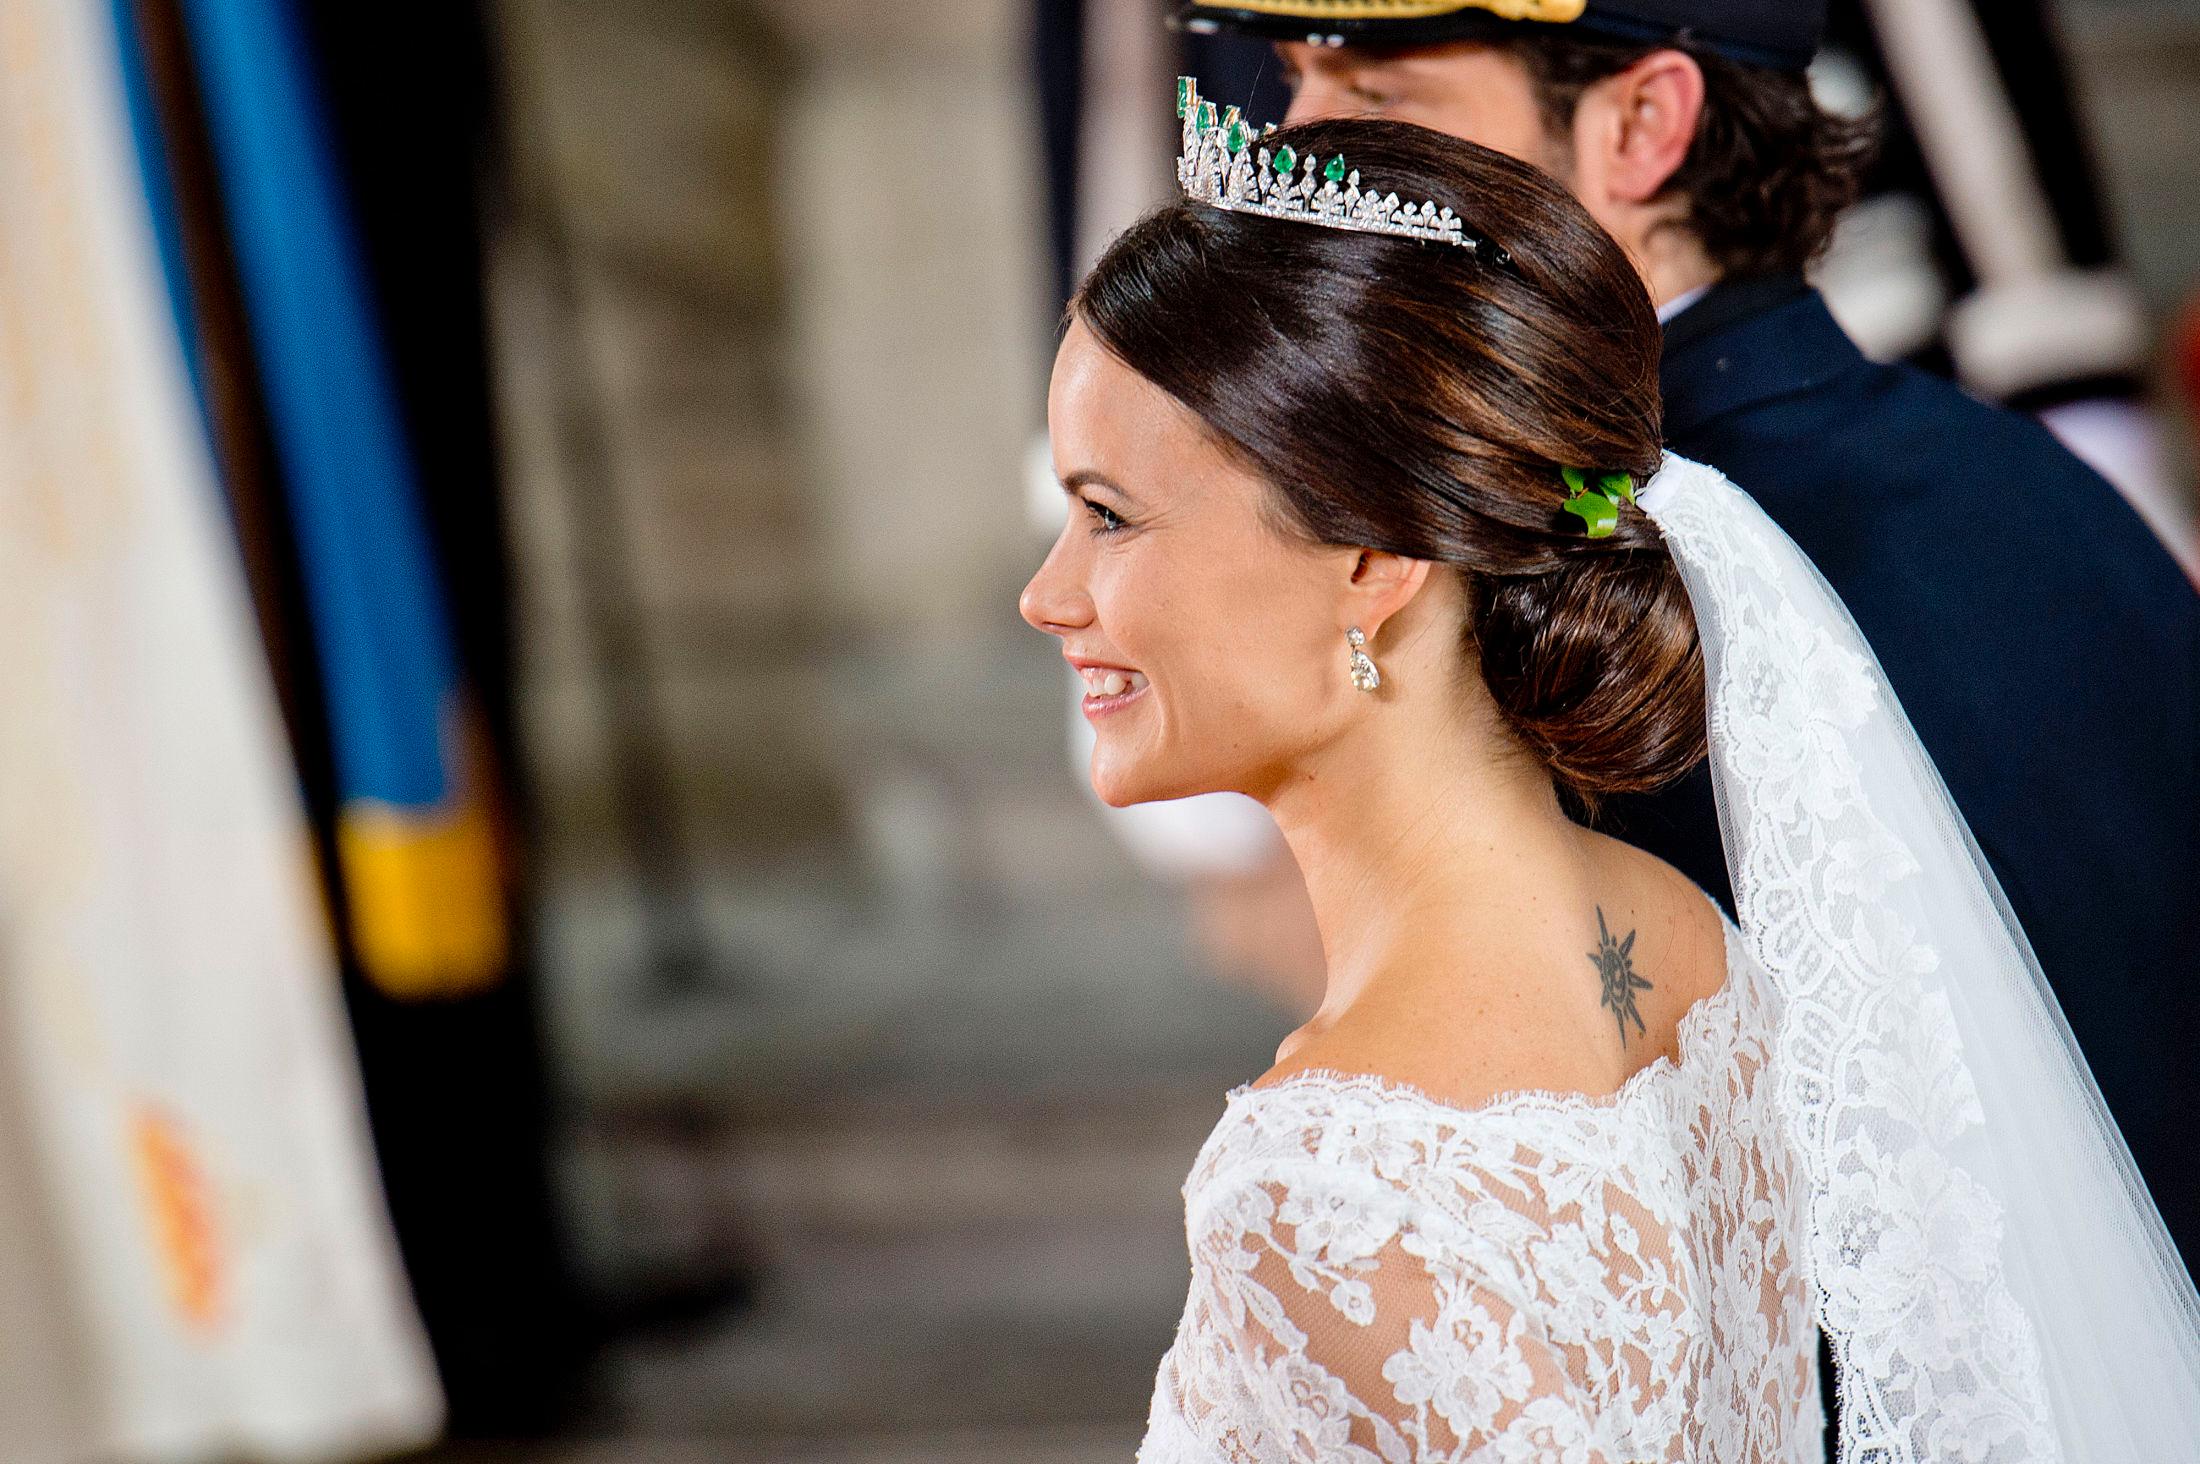 PRINSESSEBRUD: Prinsesse Sofia lot kjolen gå akkurat under tatoveringen slik at den syntes da hun giftet seg med sin prins Carl Philip. Foto: NTB scanpix